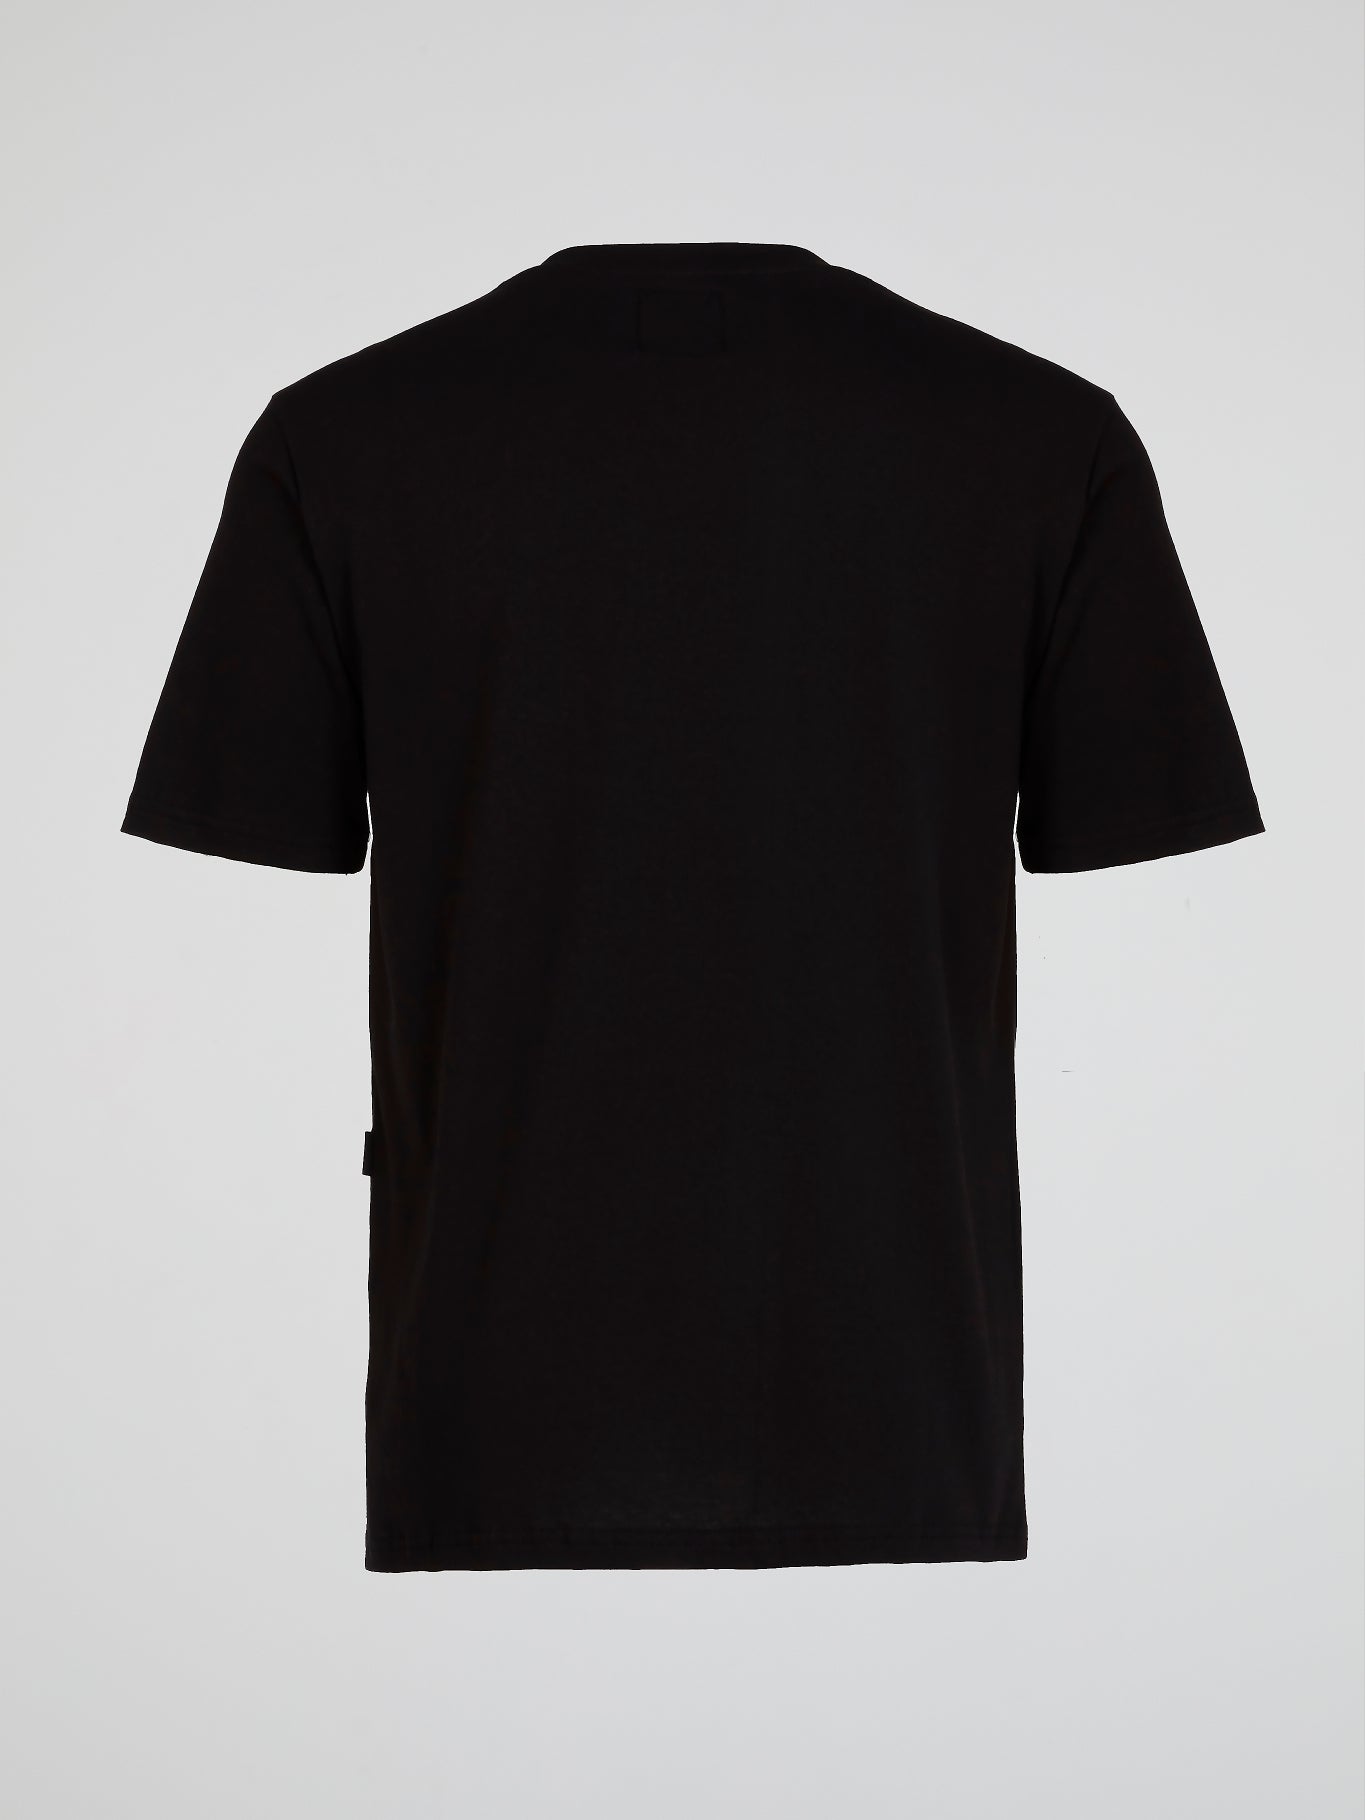 Black Graphic Print Crewneck T-Shirt